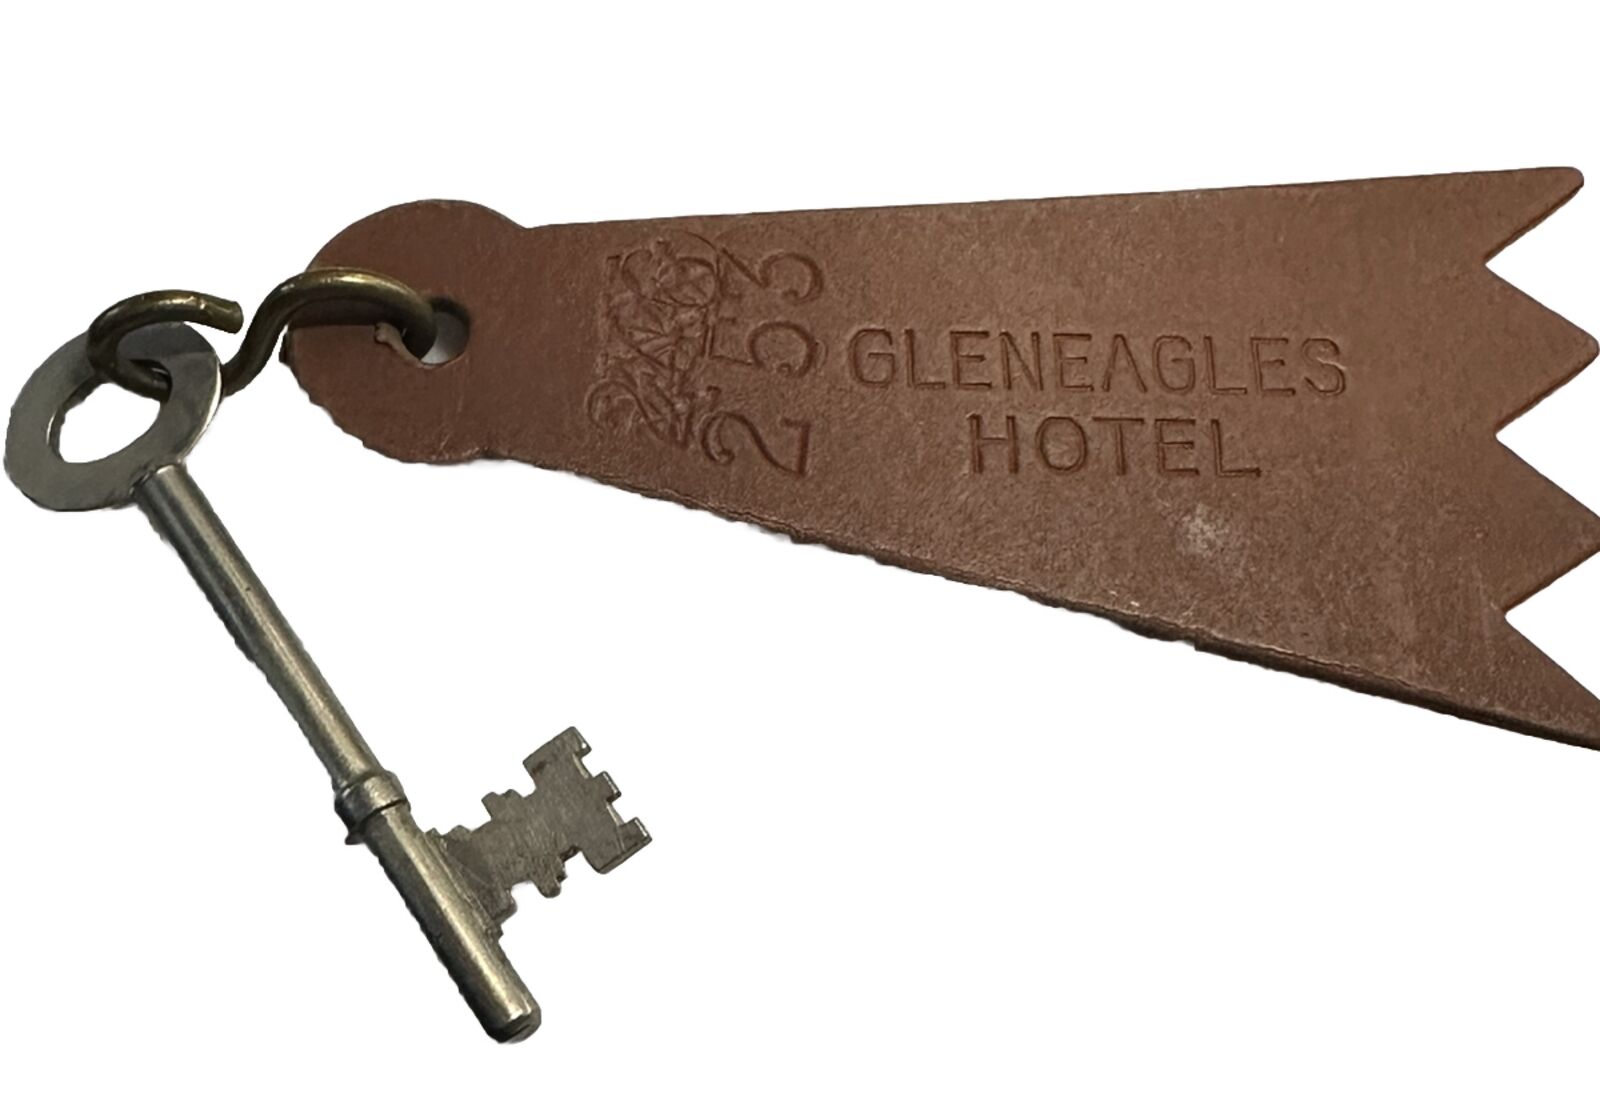 Vintage Gleneagles Hotel Perthshire Scotland Travel Keychain Key Ring Chain Fob